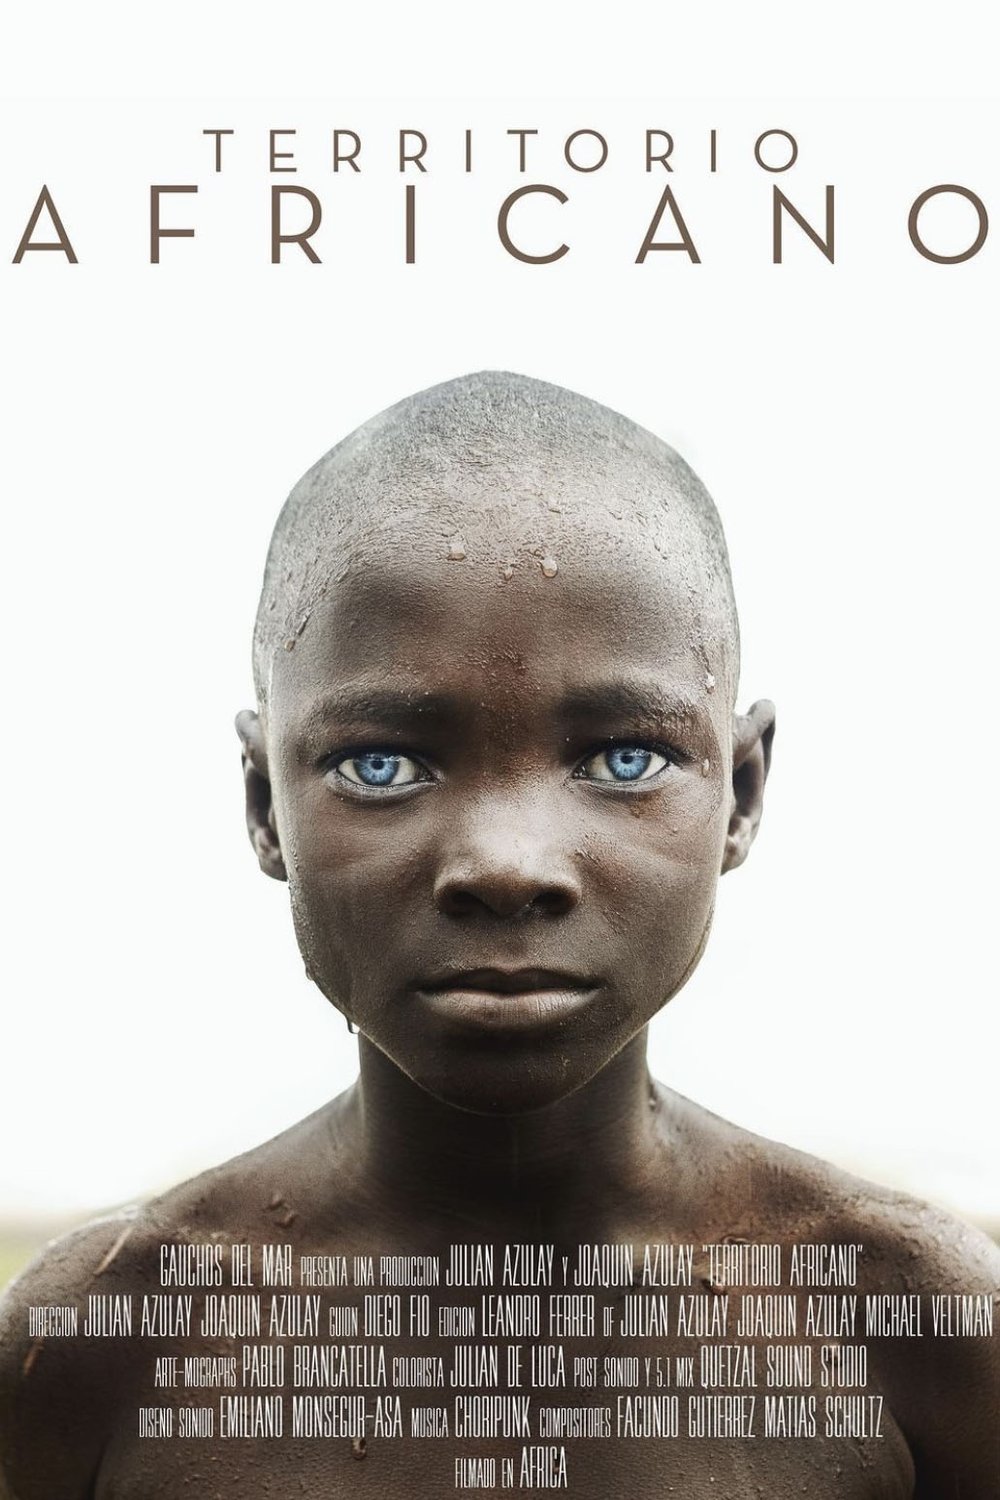 L'affiche originale du film Territorio Africano en espagnol